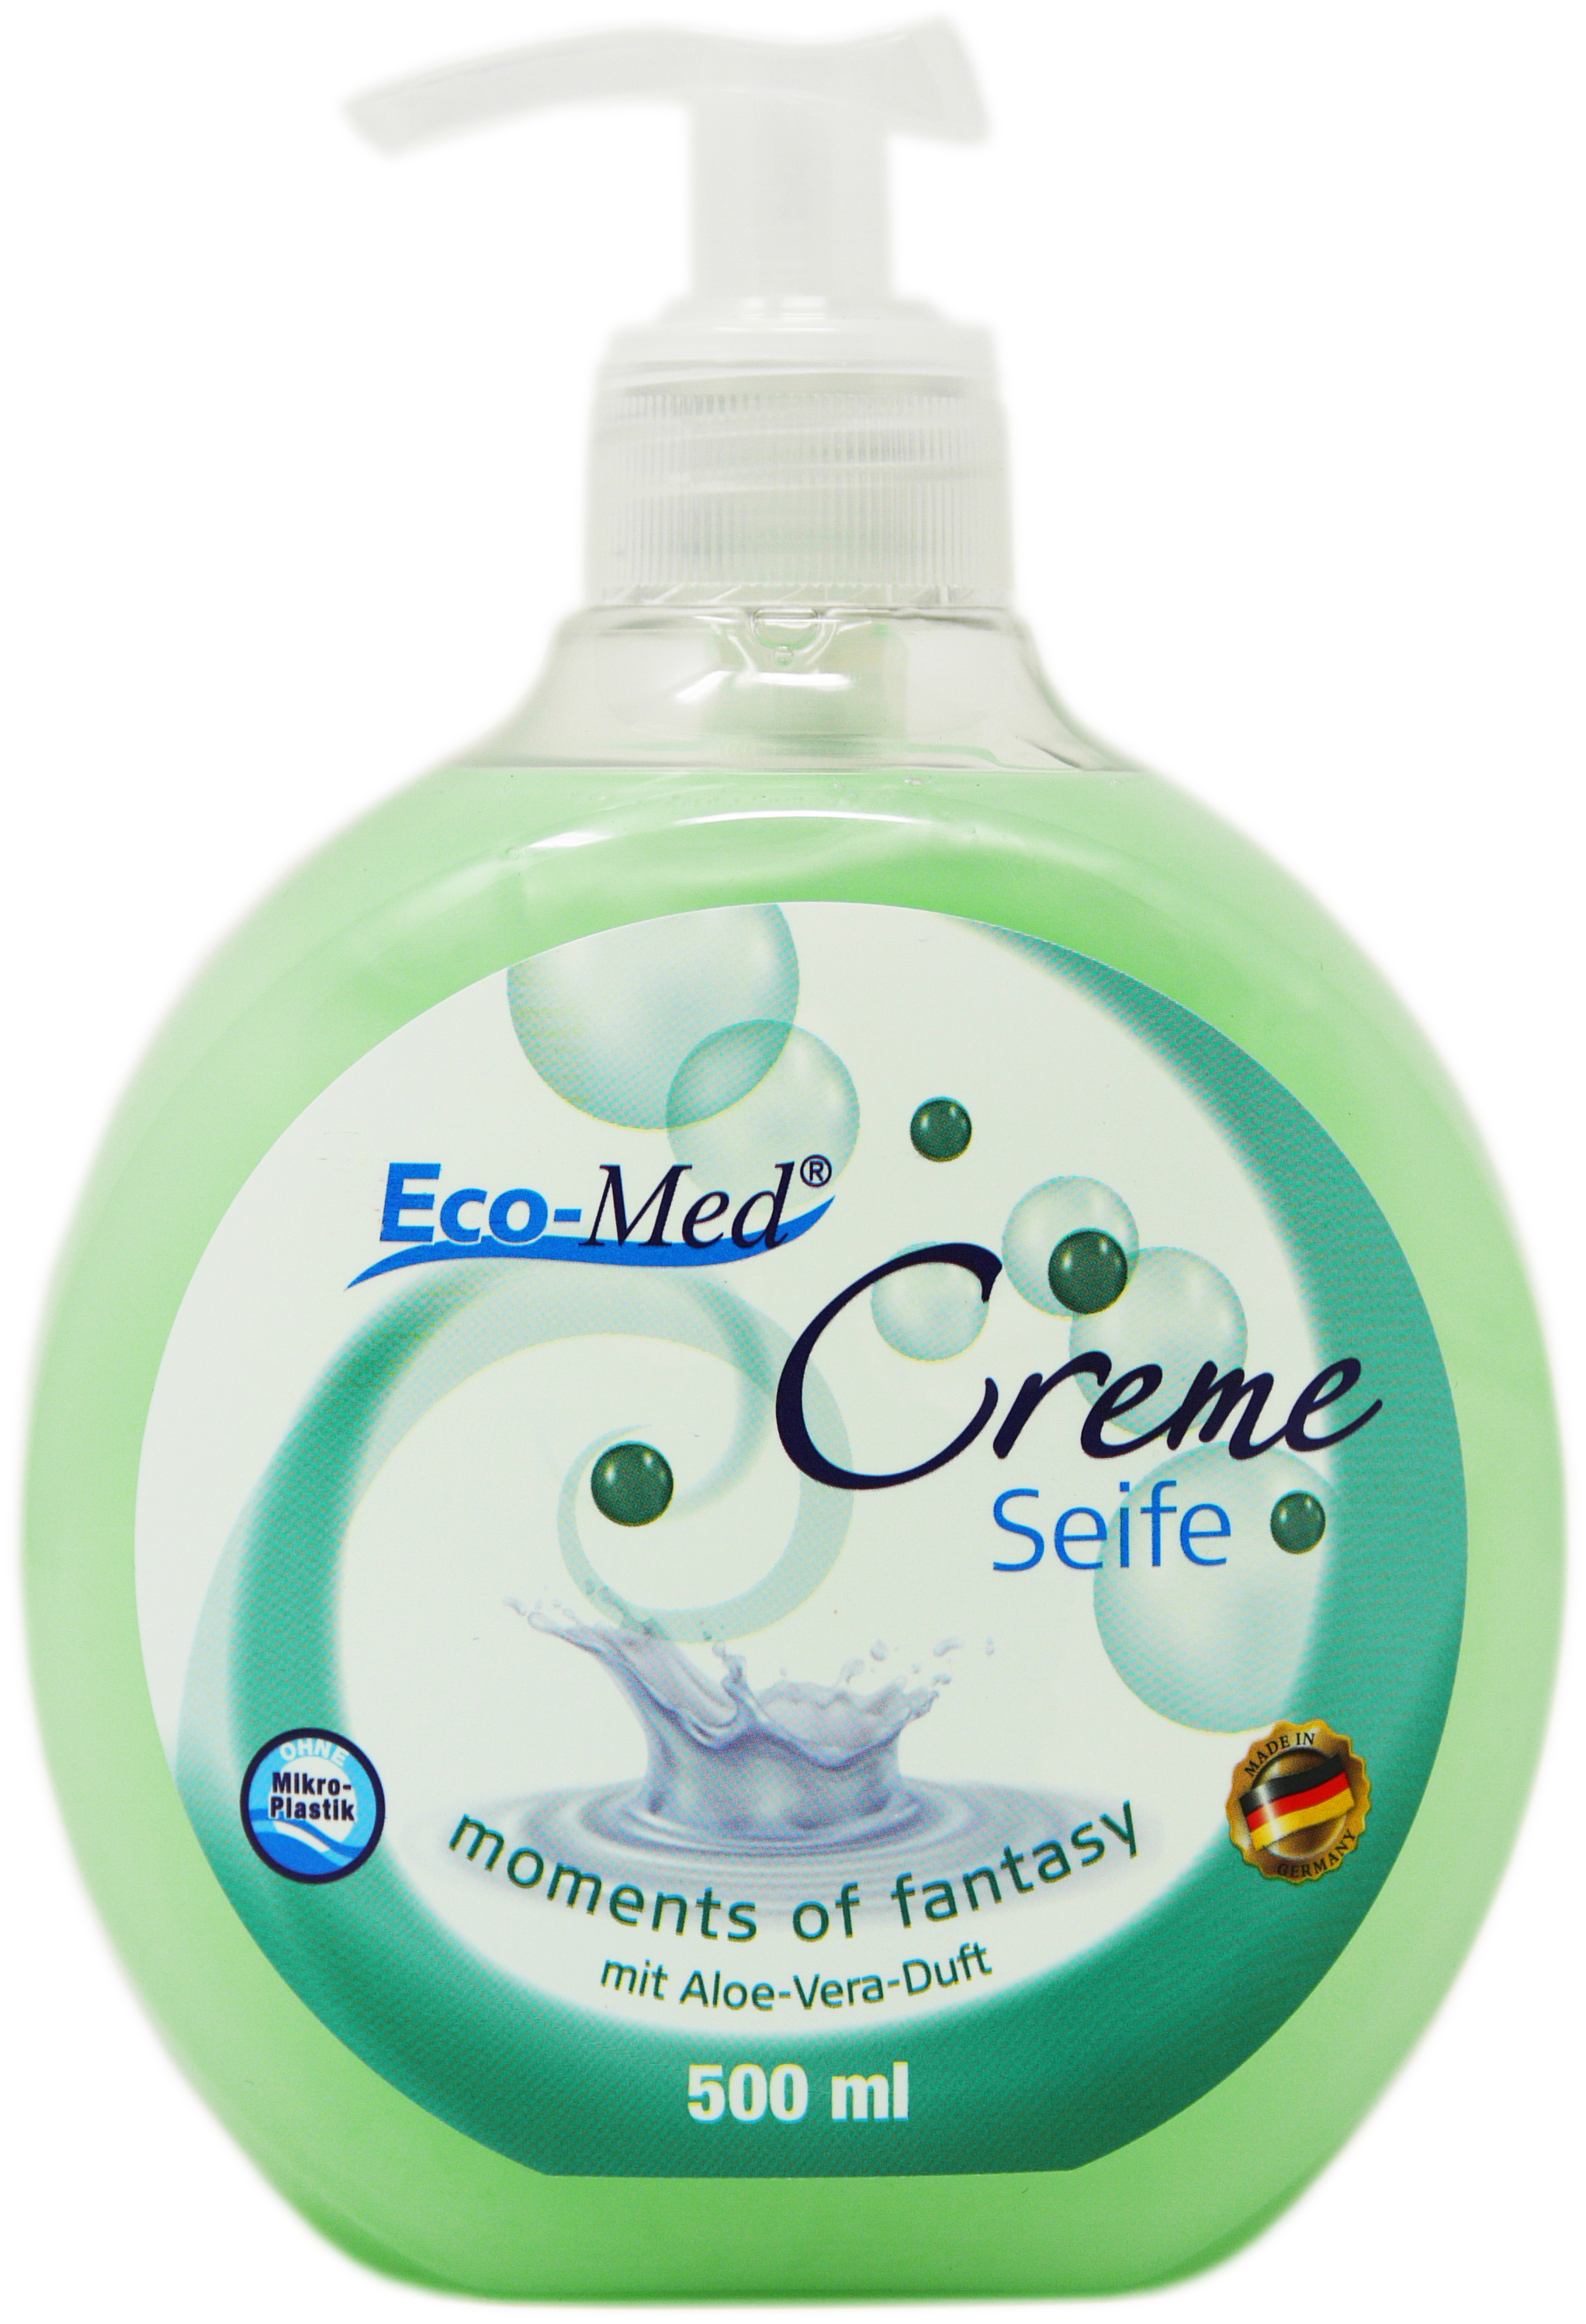 01622 - creamsoap 500 ml - moments of fantasy - with aloe vera fragrance